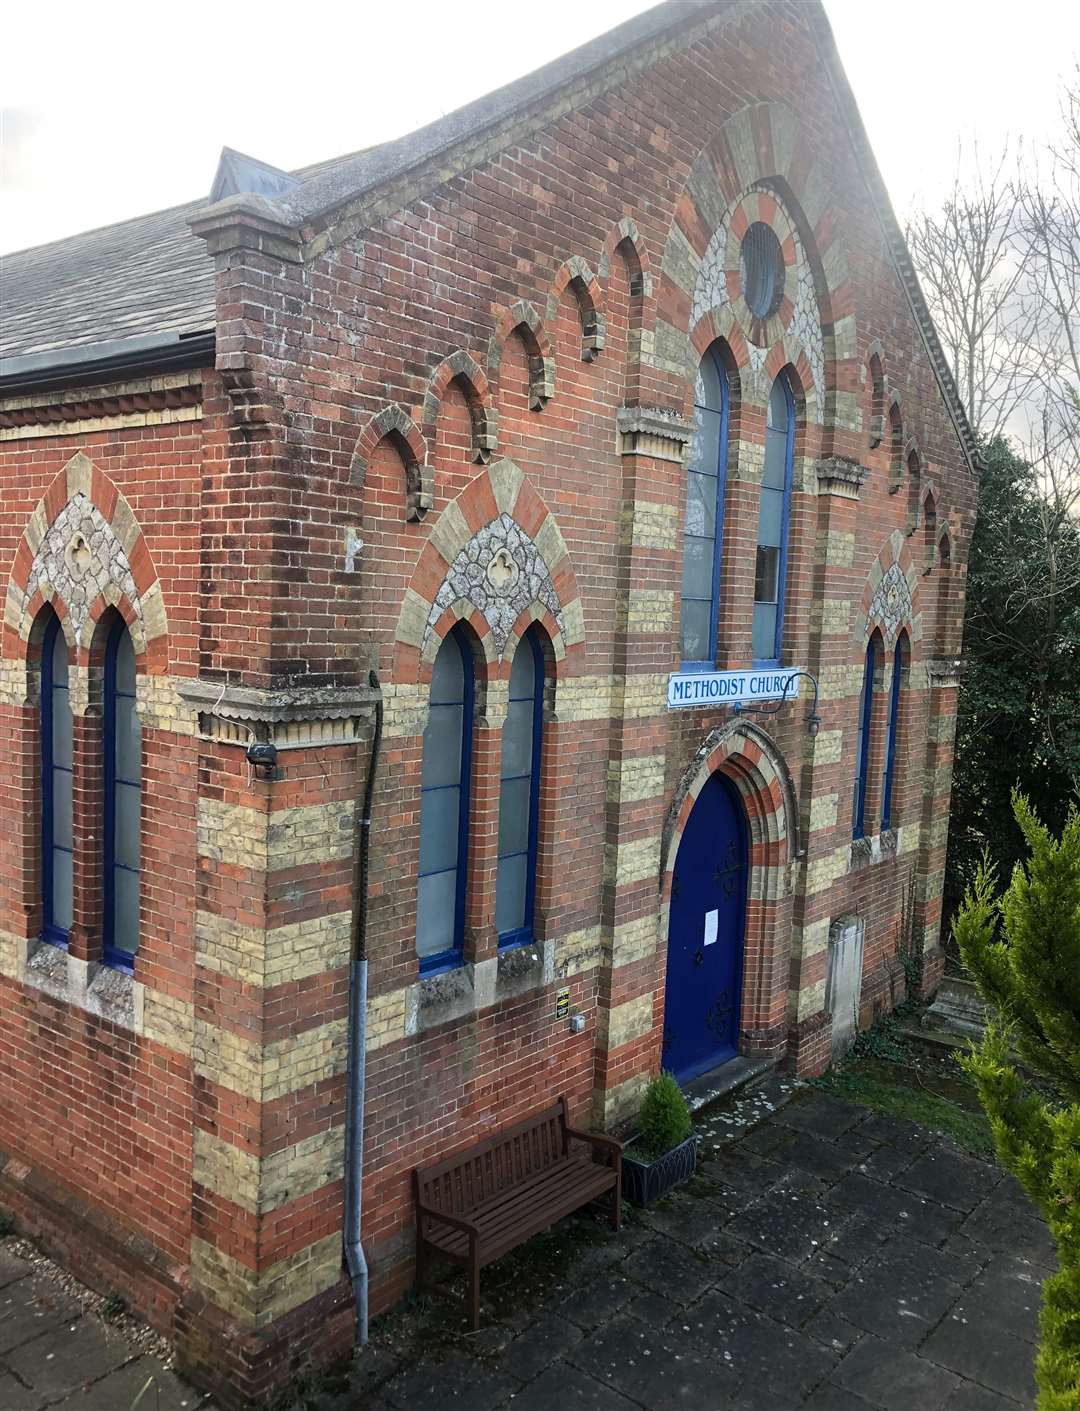 The old Headcorn Methodist Church